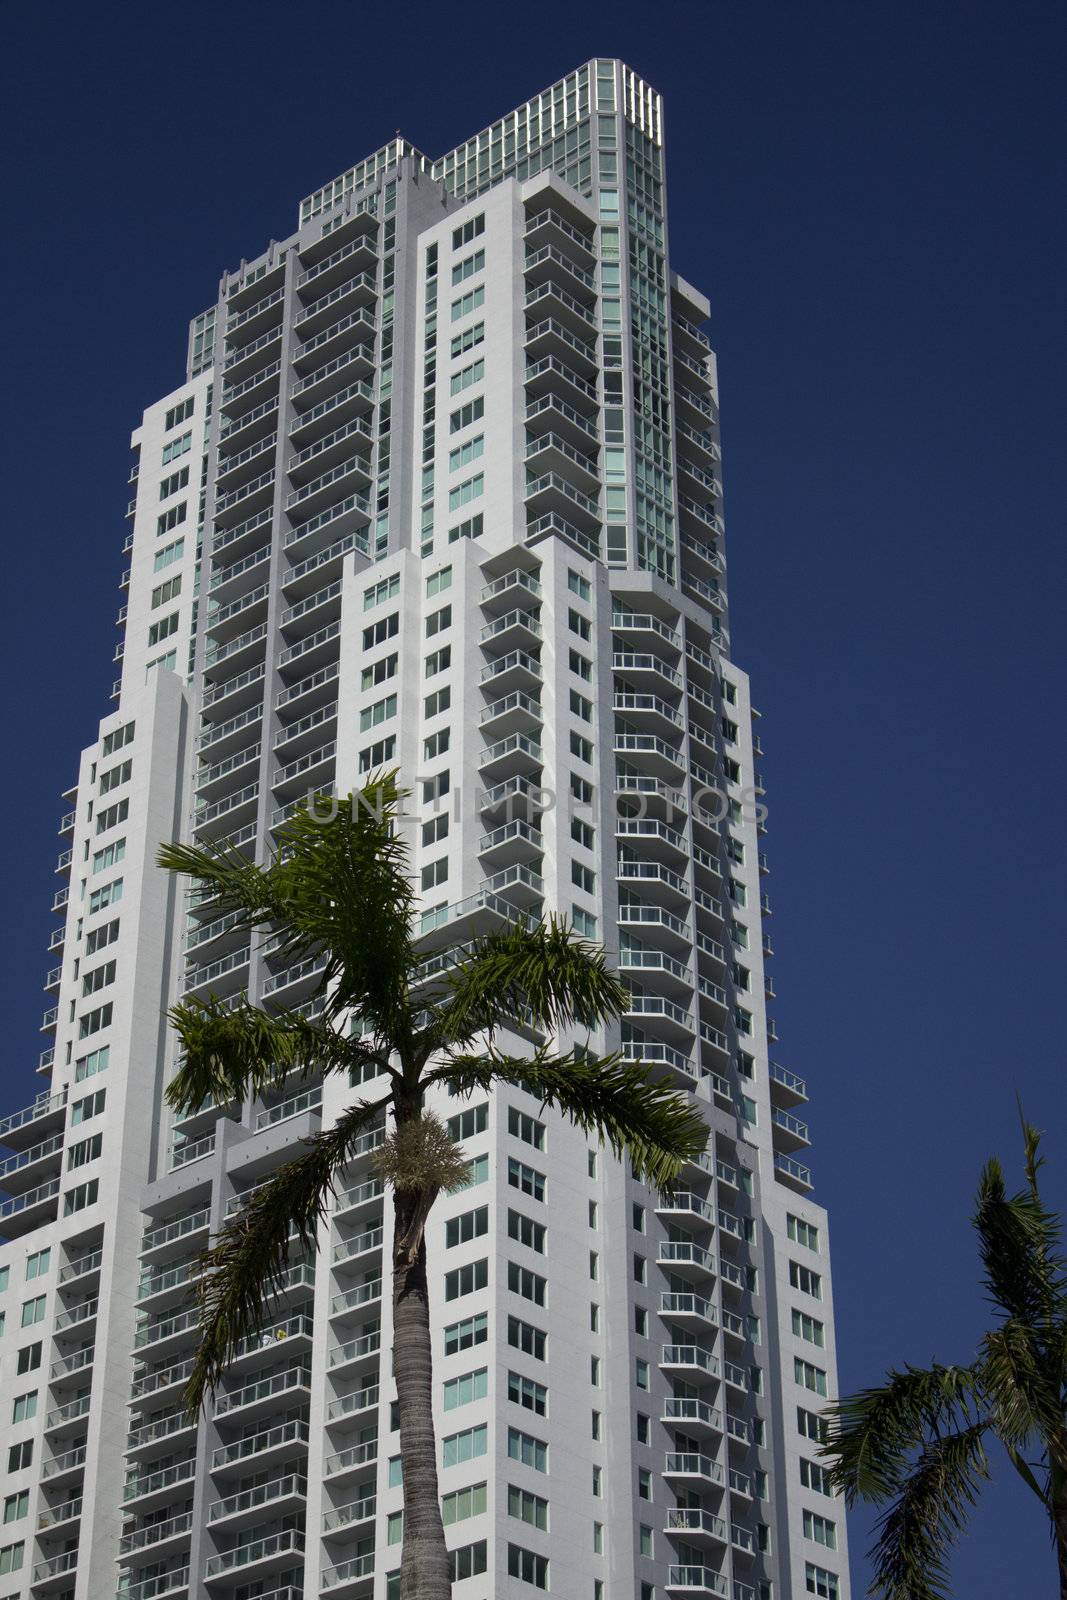 Condo or business building in Miami Florida